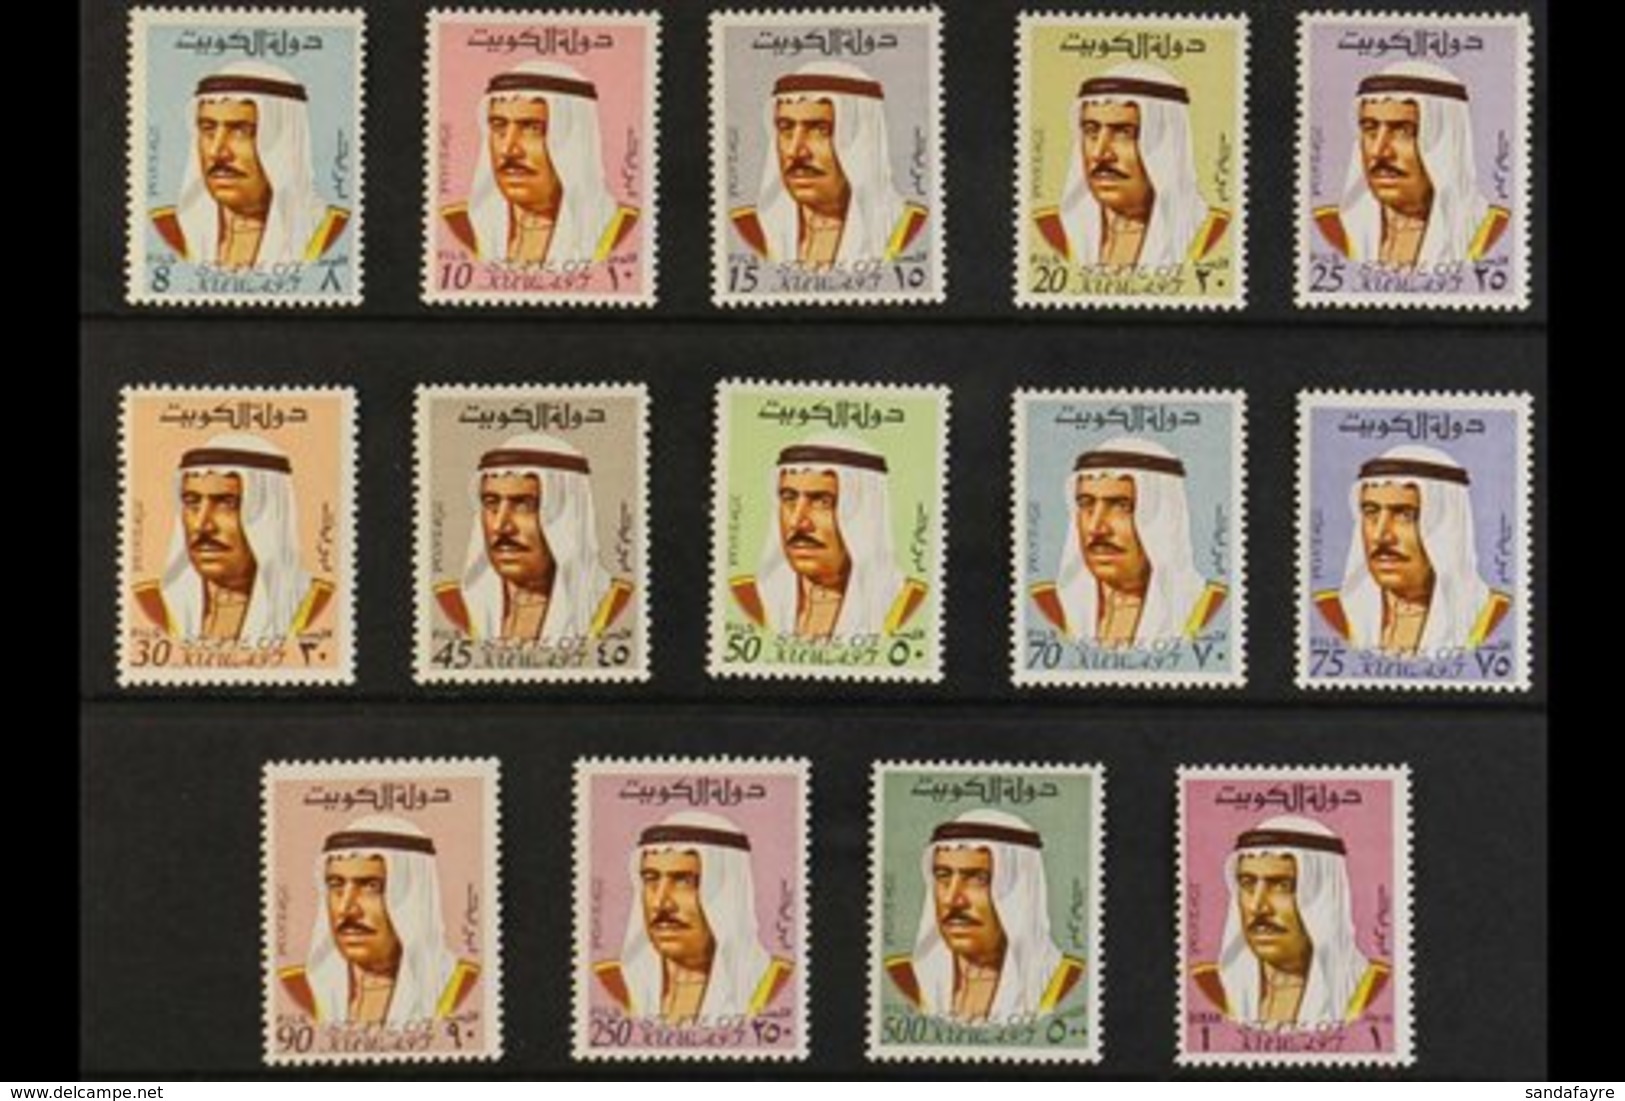 1969-74 Amir Sheikh Sabah Complete Set, SG 457/70, Fine Never Hinged Mint, Fresh. (14 Stamps) For More Images, Please Vi - Kuwait